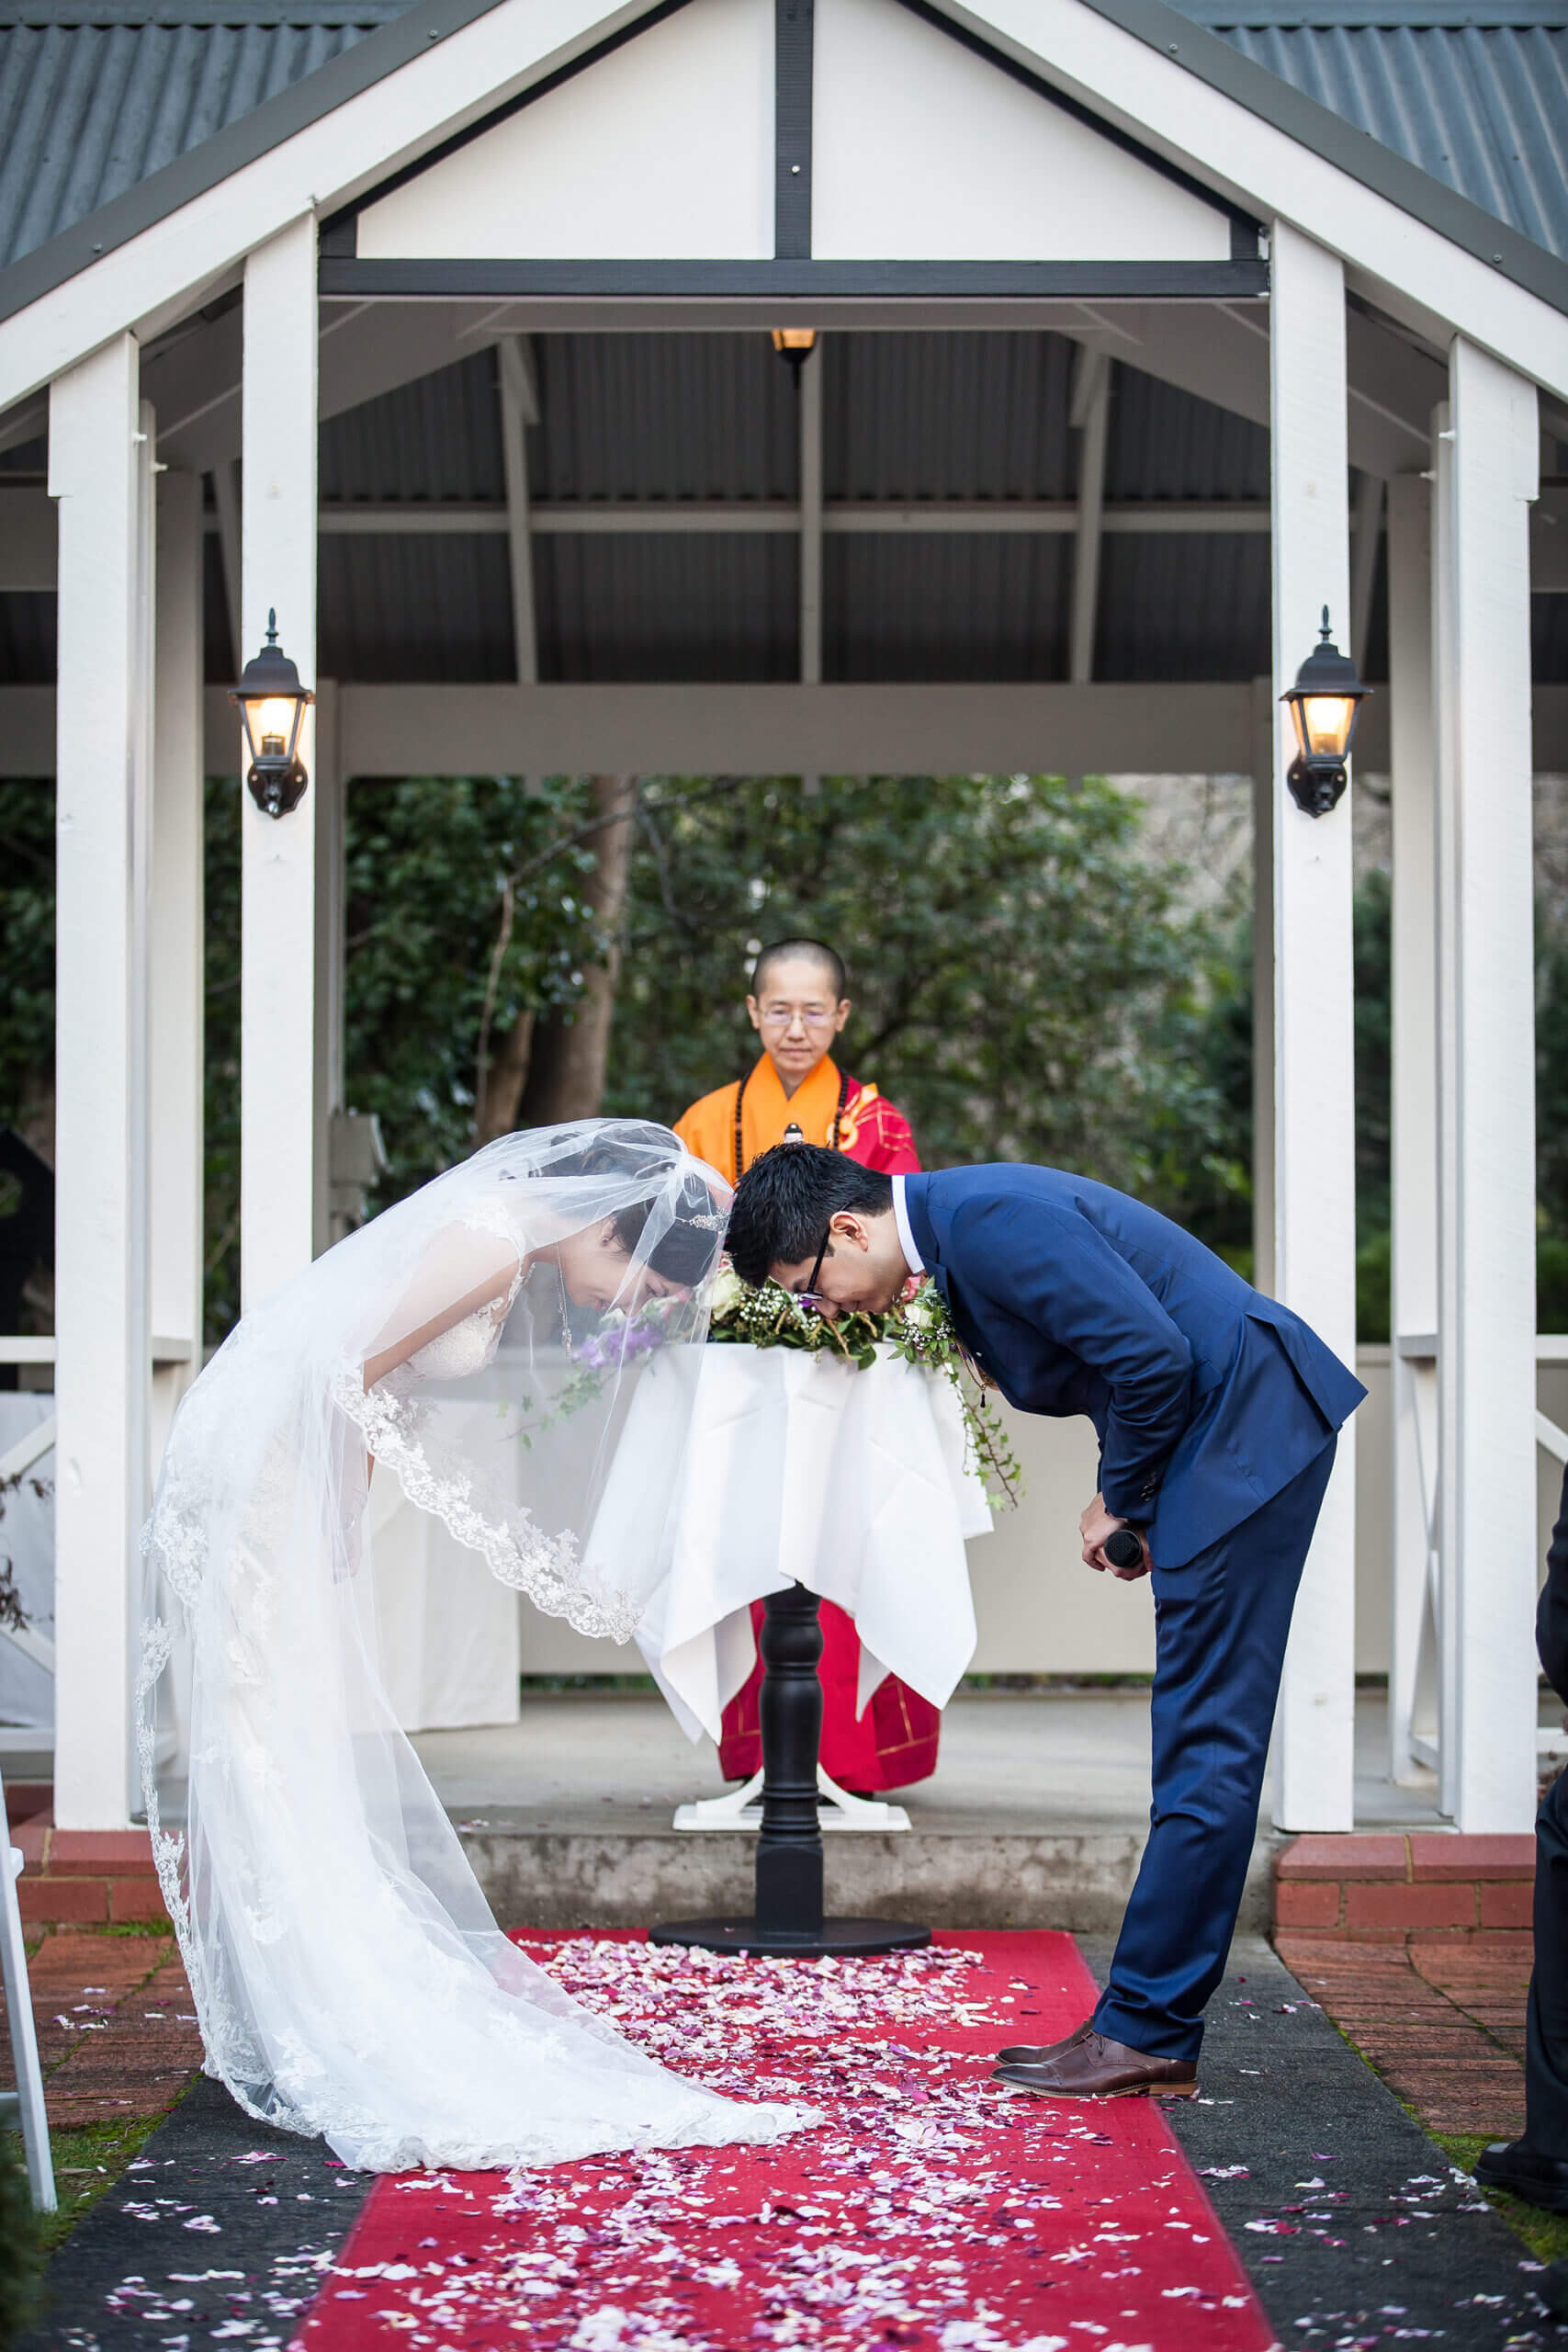 Jacqueline and Kek's Buddhist wedding captured by Monkee Photography